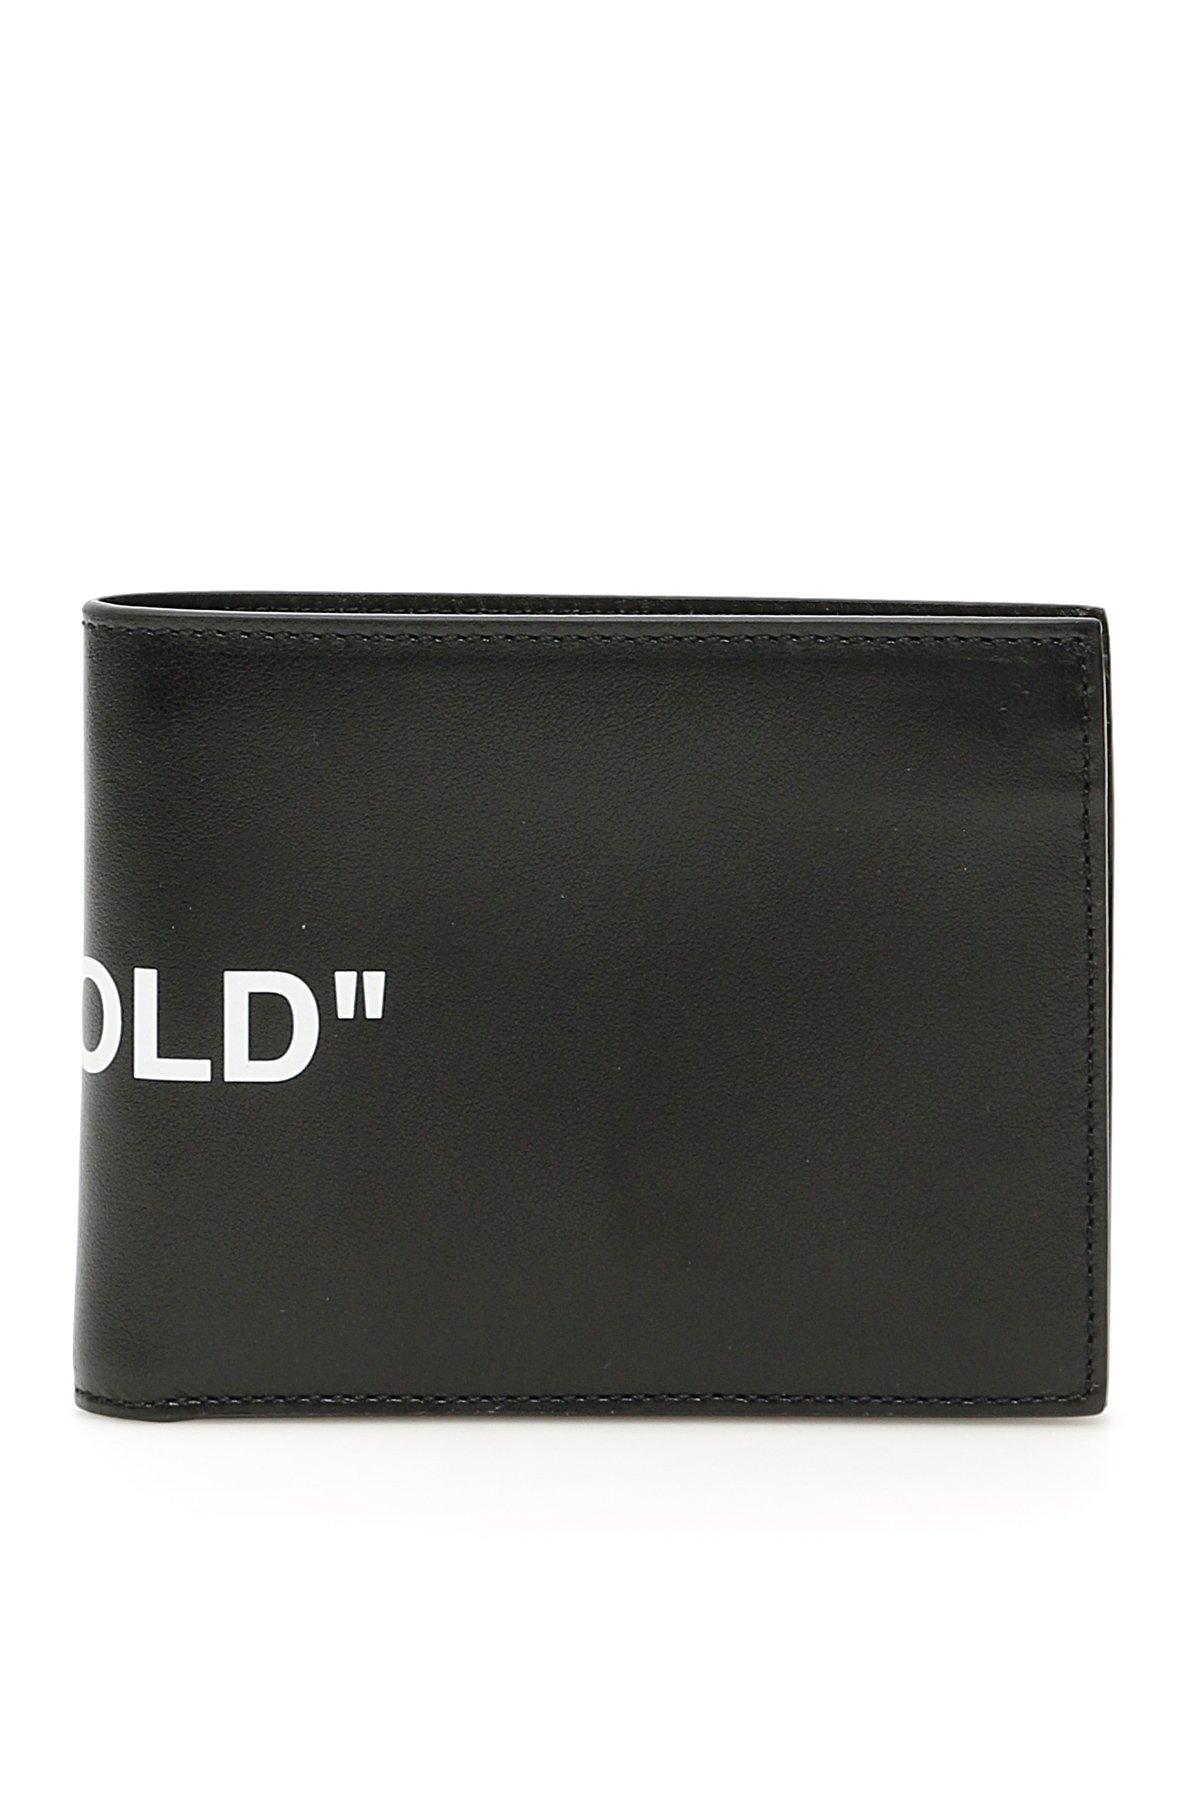 Off-White c/o Virgil Abloh Leather Bi-fold Wallet in Black for Men - Lyst